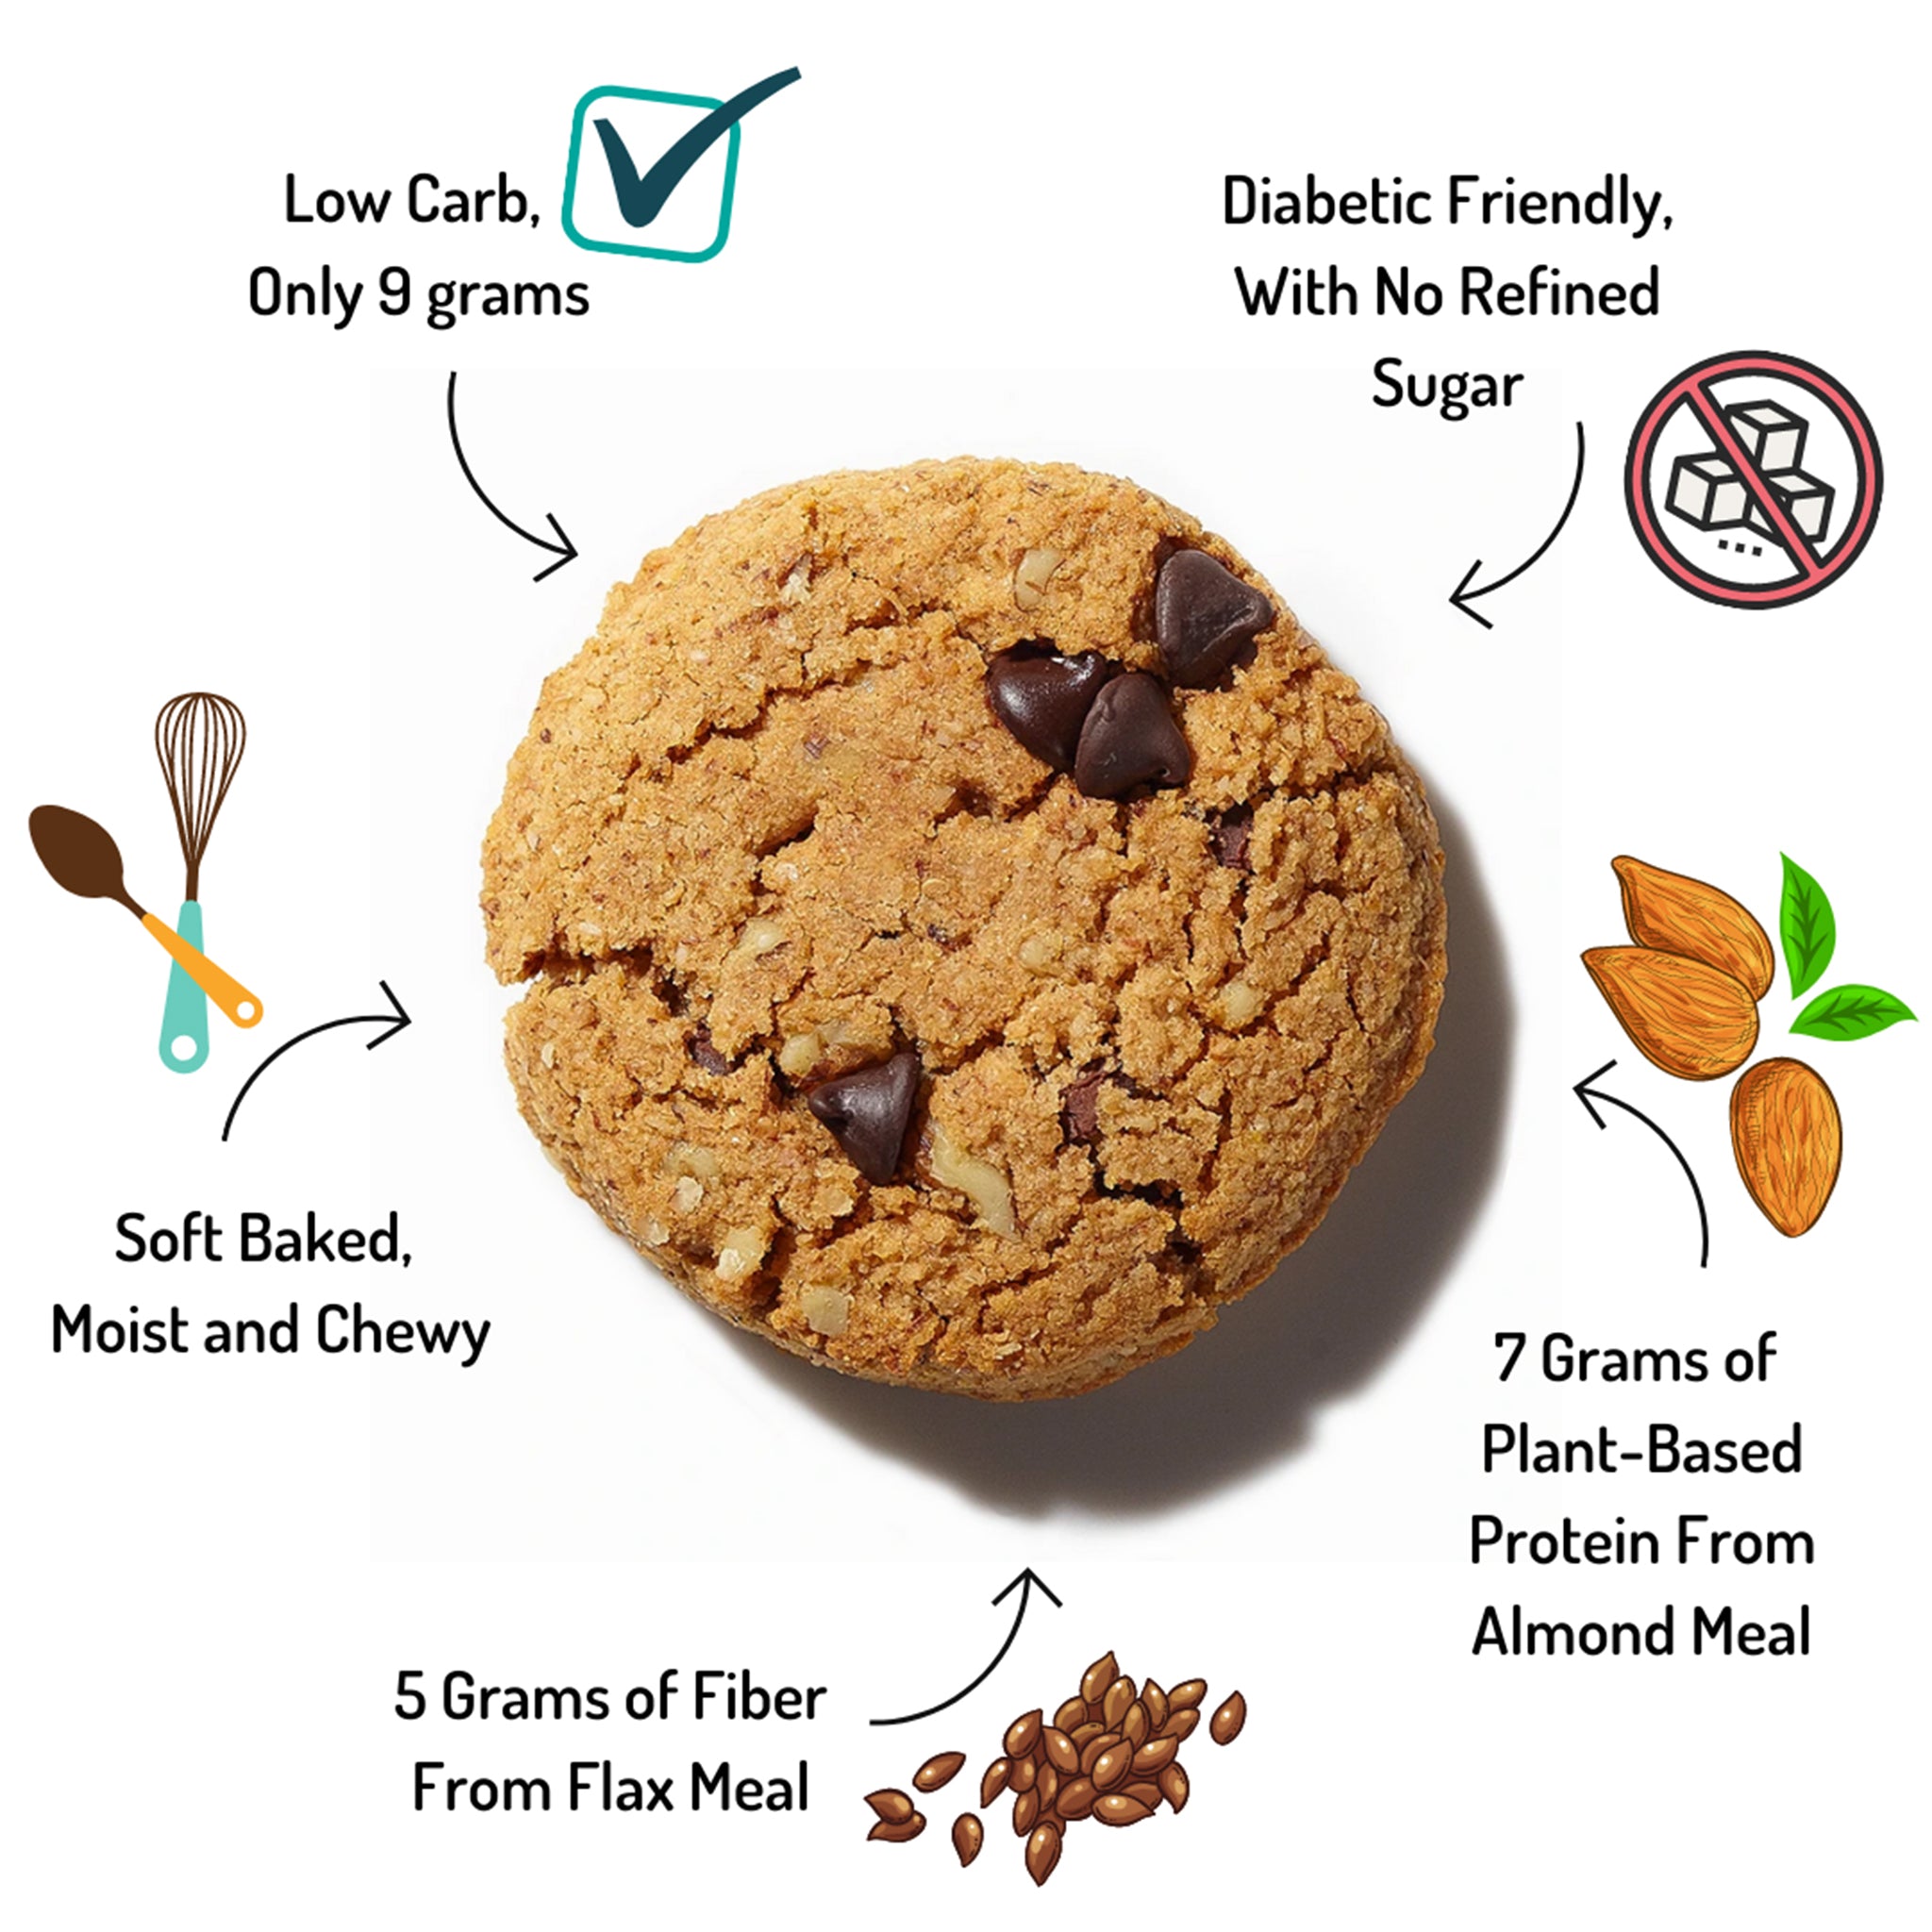 Chocolate Chip Walnut - The Empowered Cookie Ingredients